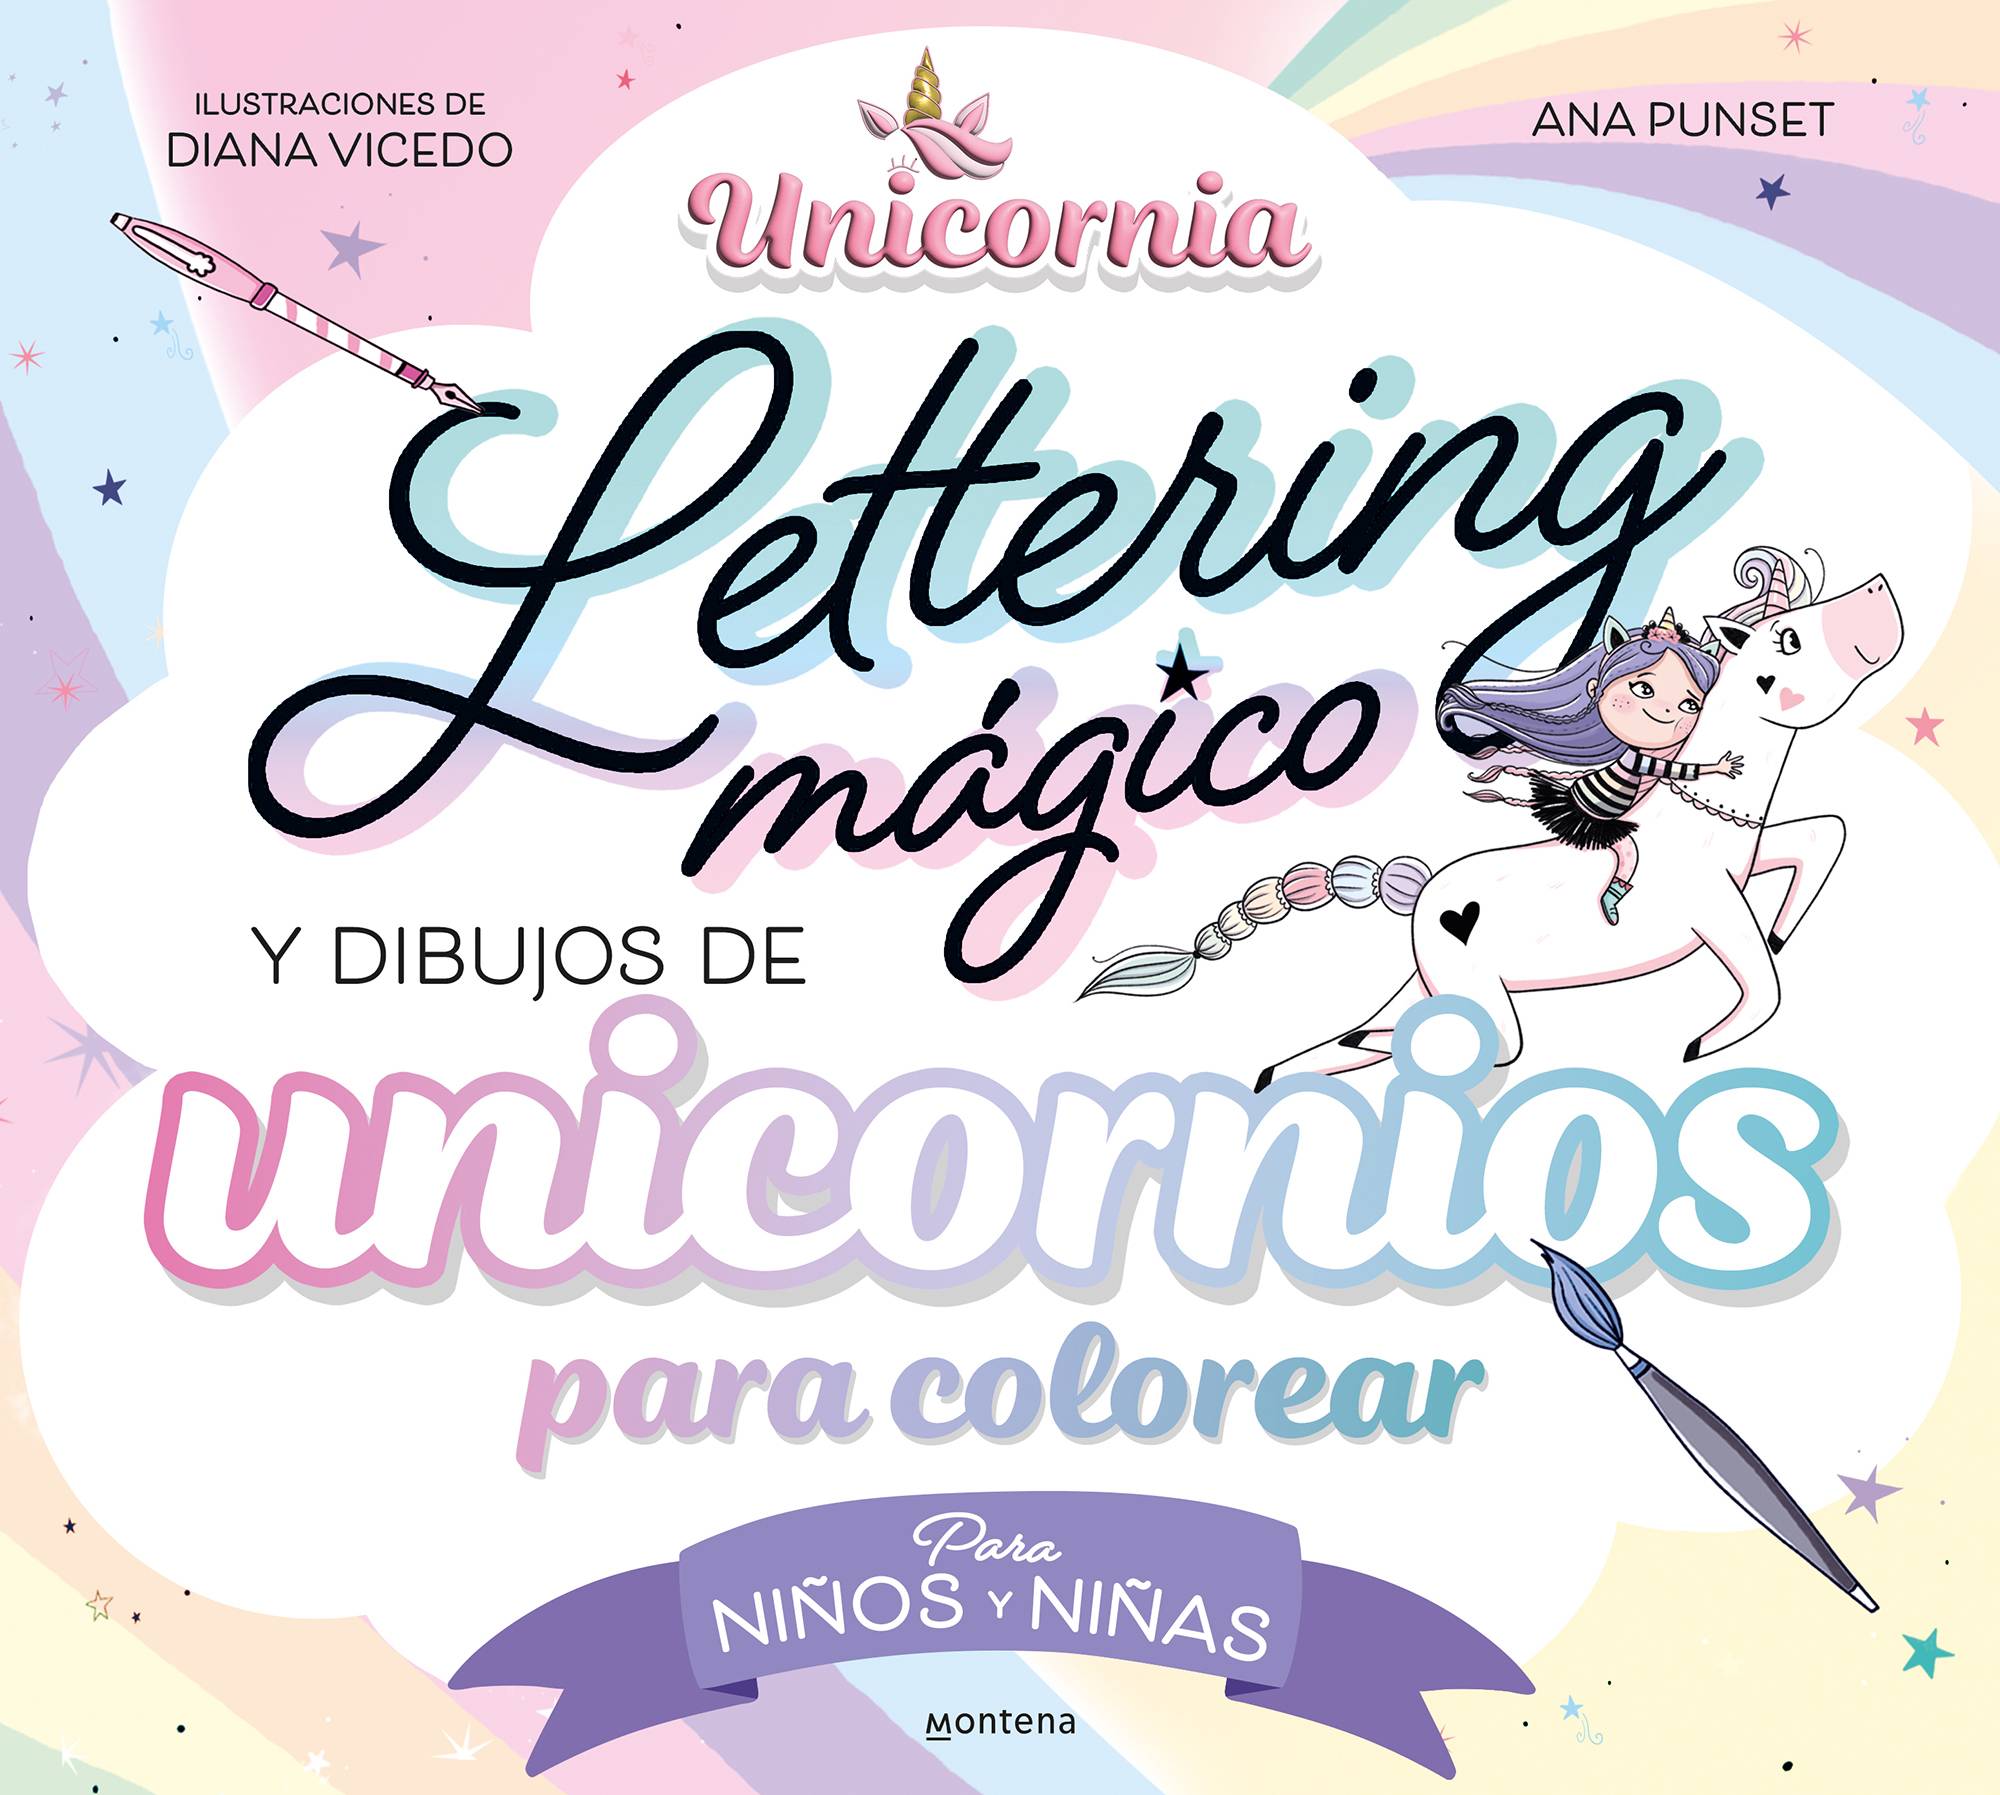 Unicornia - Lettering mágico y dibujos de unicornios para colorear​